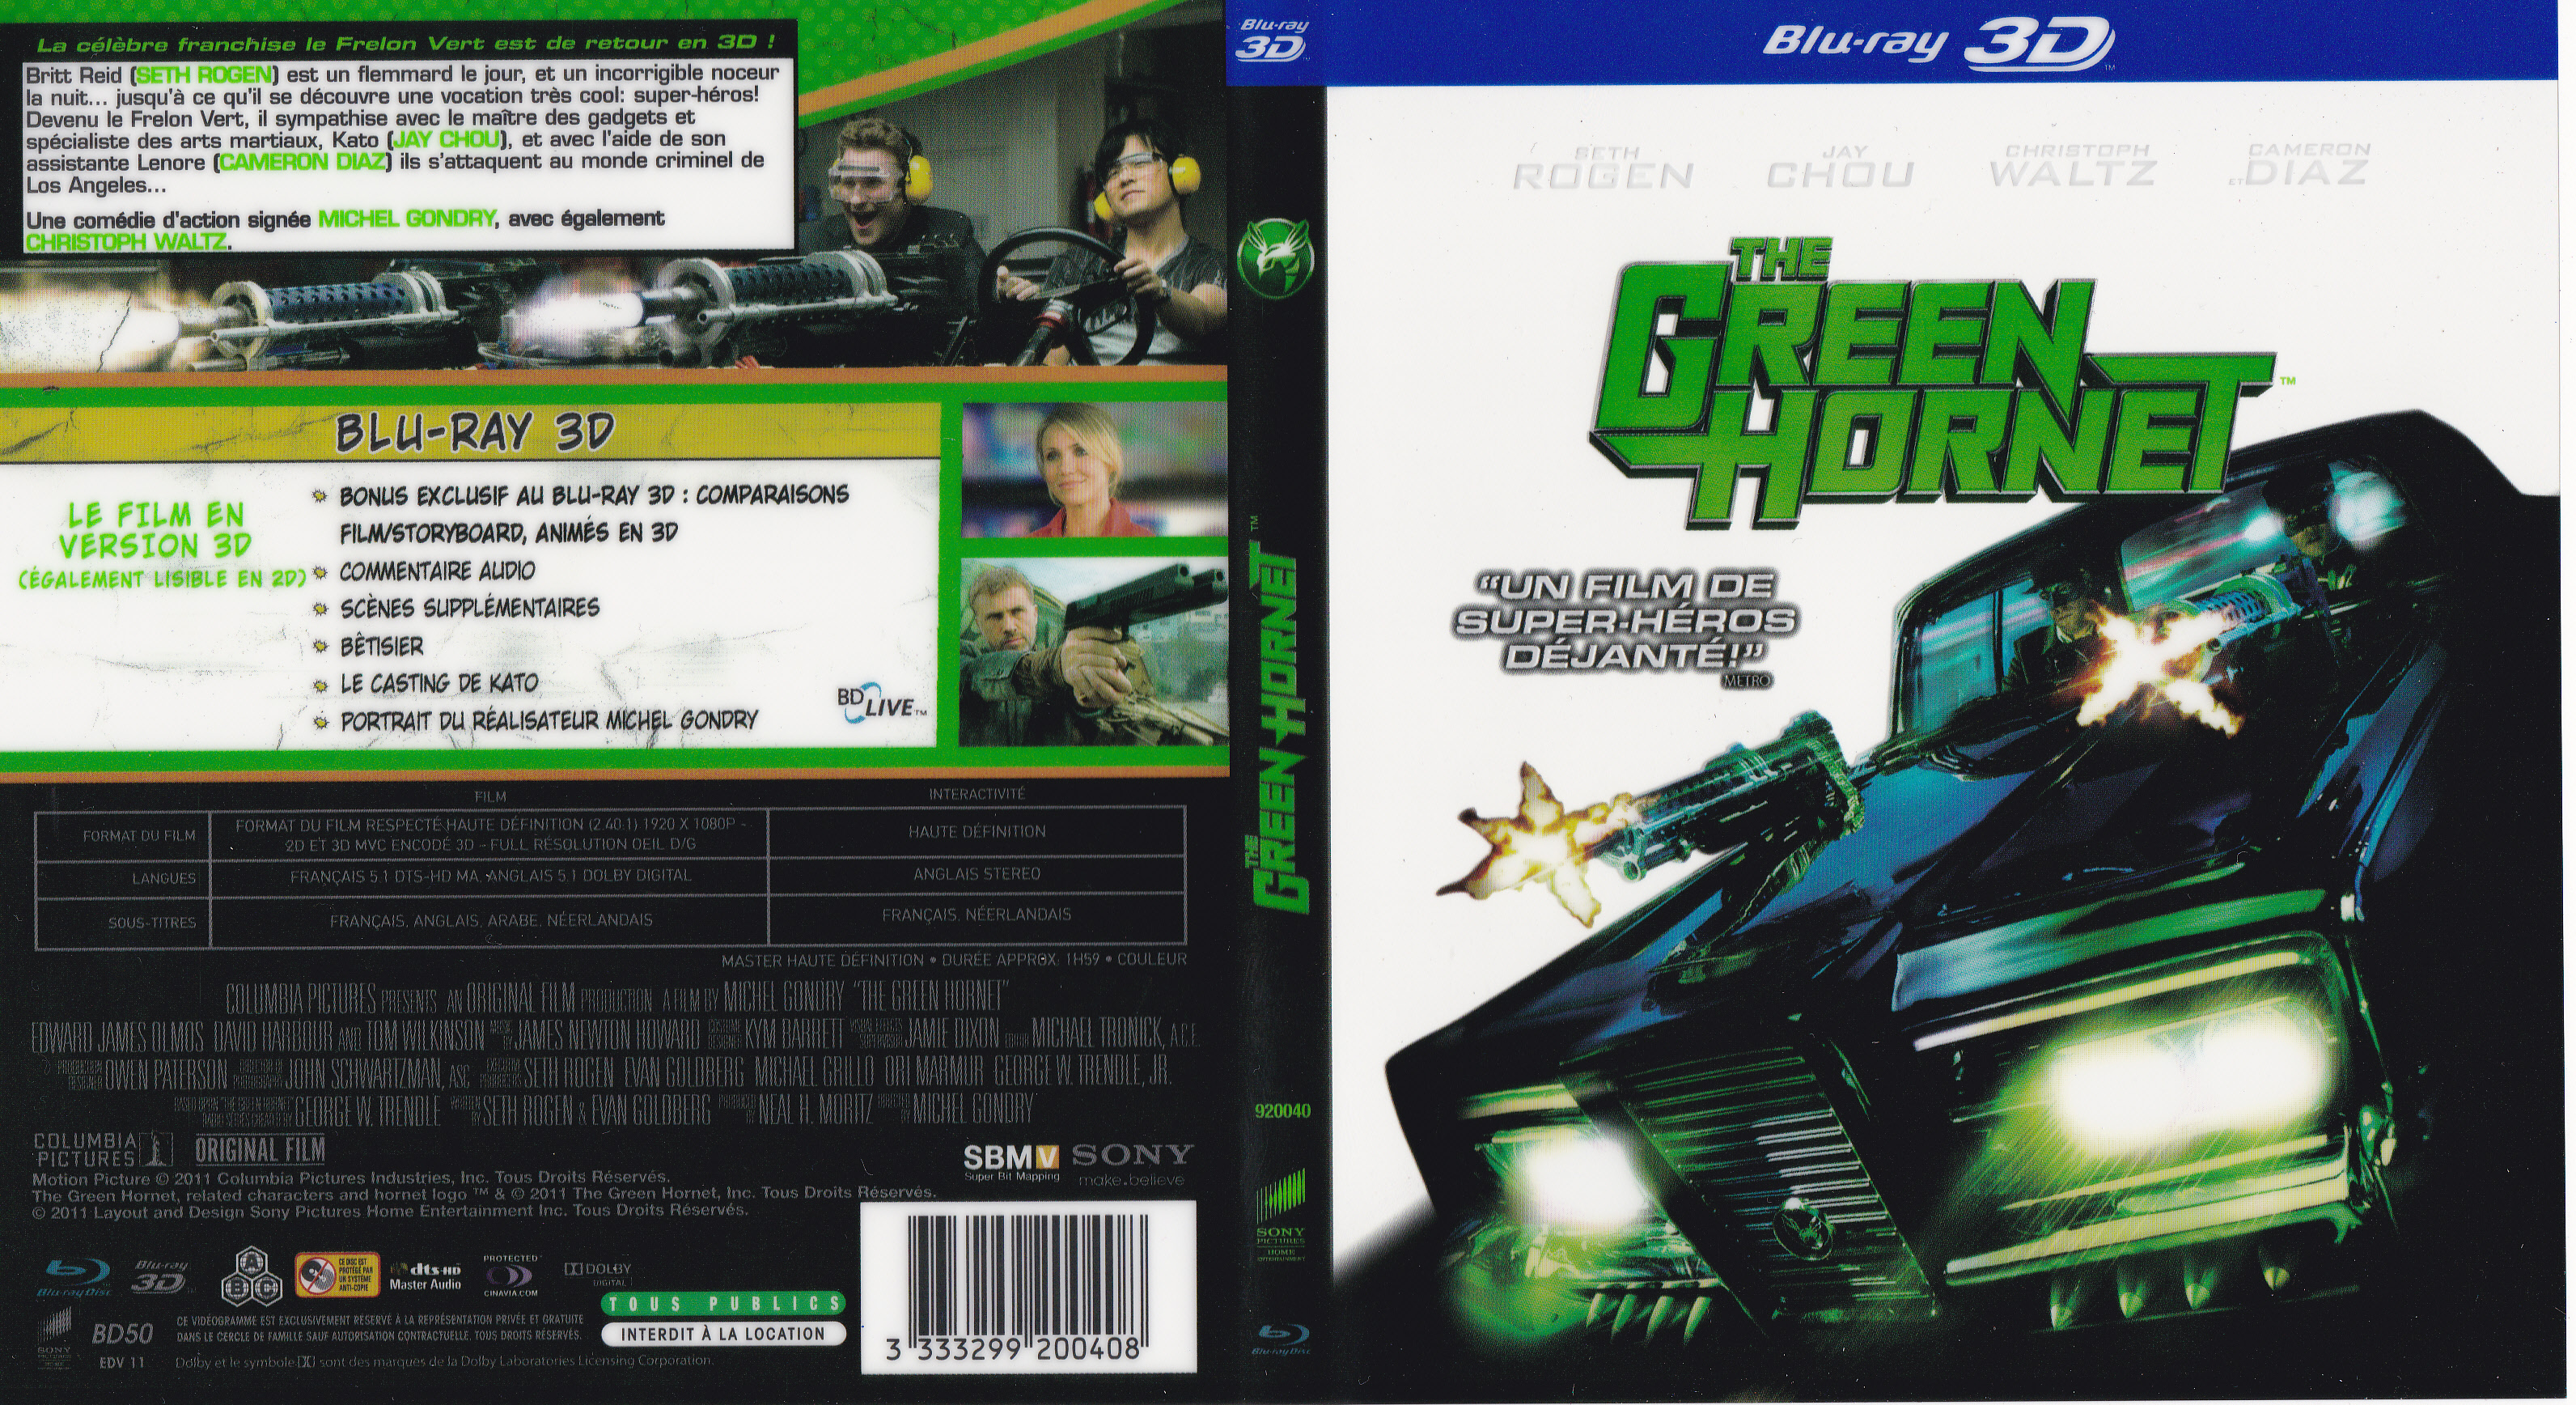 Jaquette DVD The green hornet 3D (BLU-RAY)